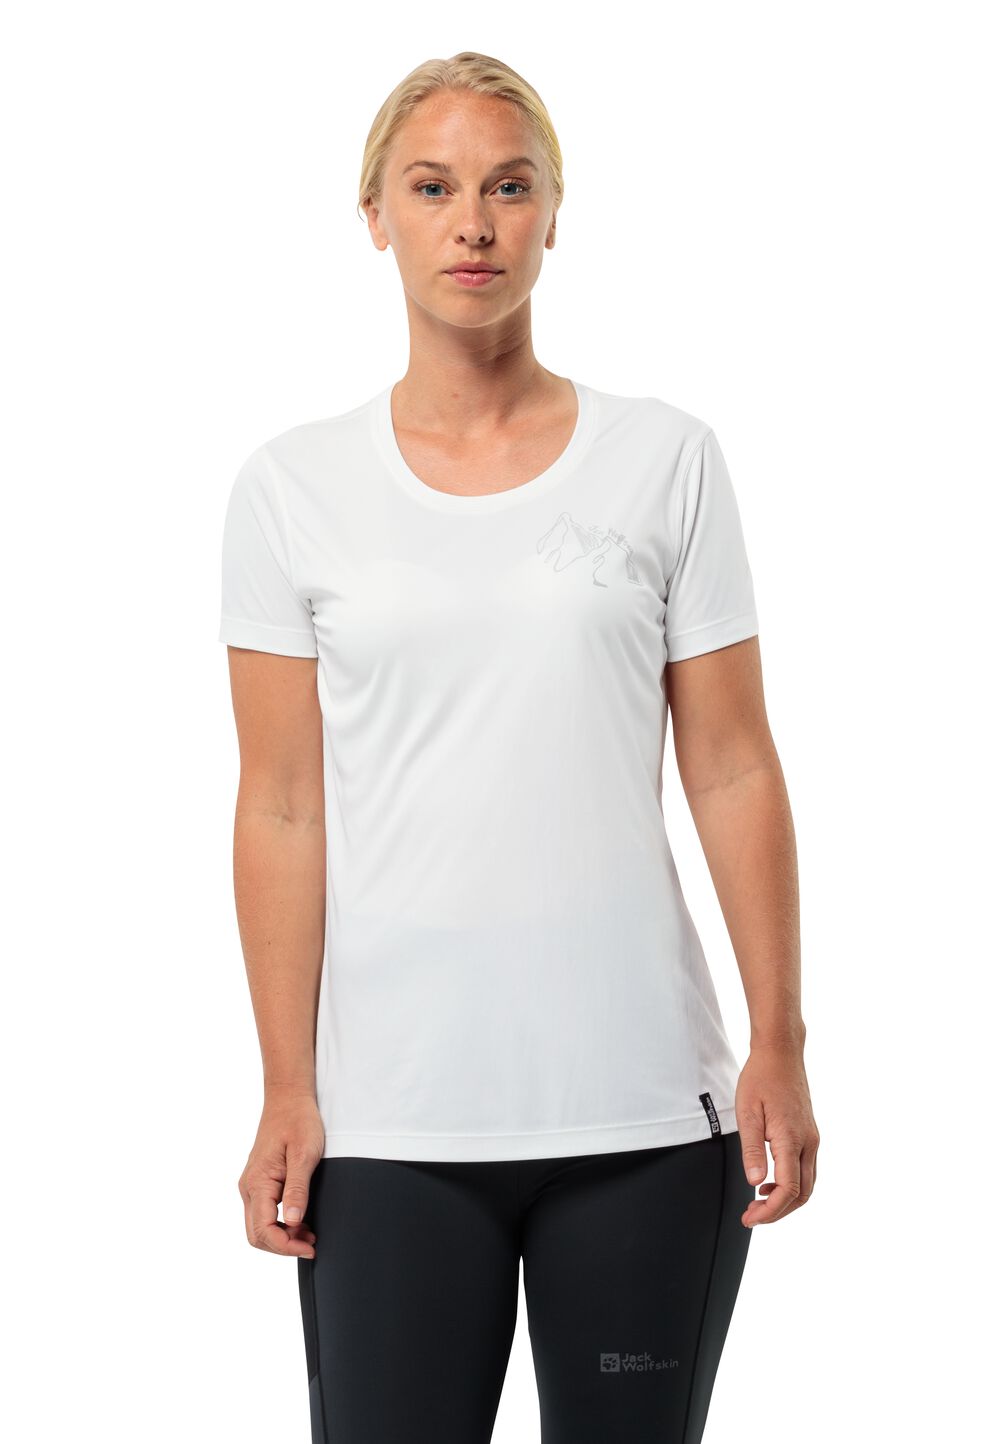 Jack Wolfskin Peak Graphic T-Shirt Women Functioneel shirt Dames S wit stark white